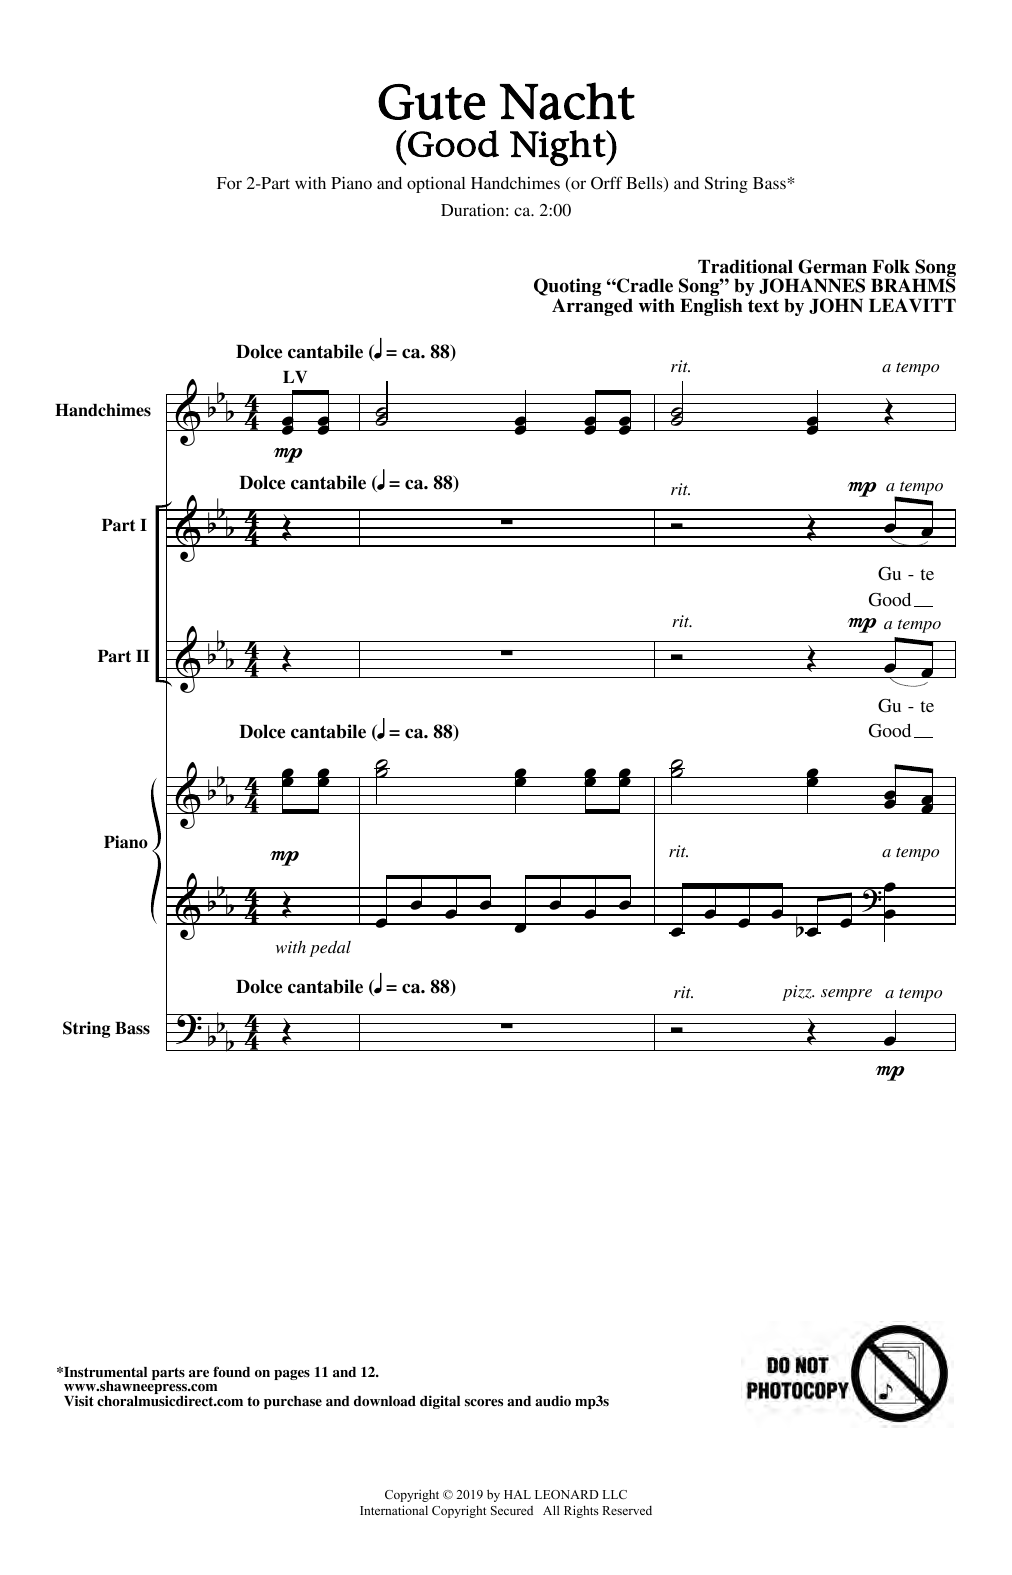 Download Johannes Brahms Gute Nacht (Good Night) (arr. John Leavitt) Sheet Music and learn how to play 2-Part Choir PDF digital score in minutes